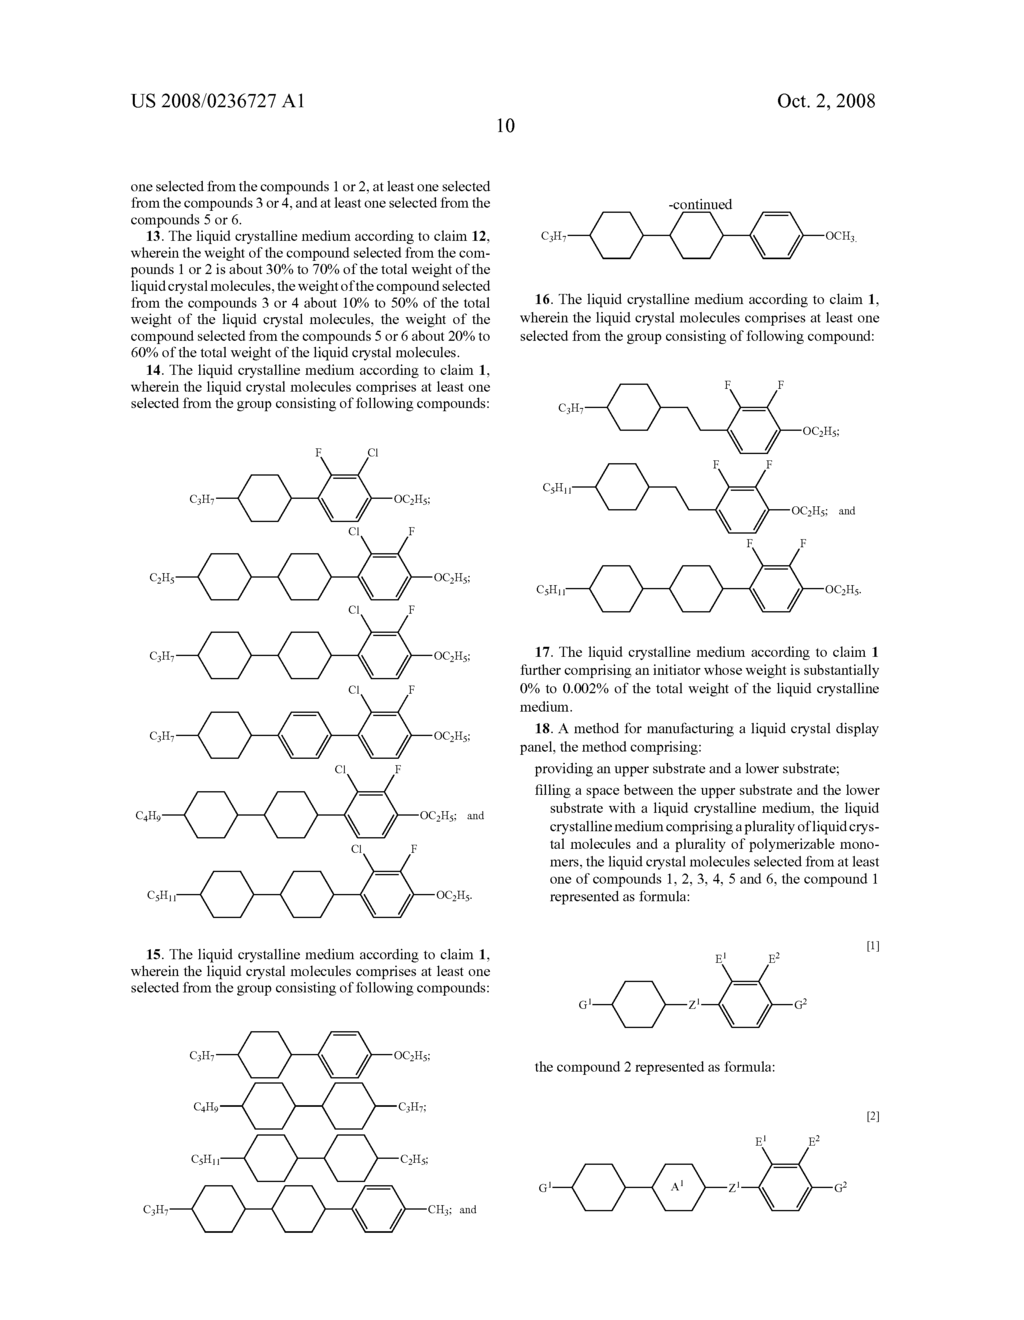 Liquid crystalline medium and method for manufacturing liquid crystal display panel - diagram, schematic, and image 13